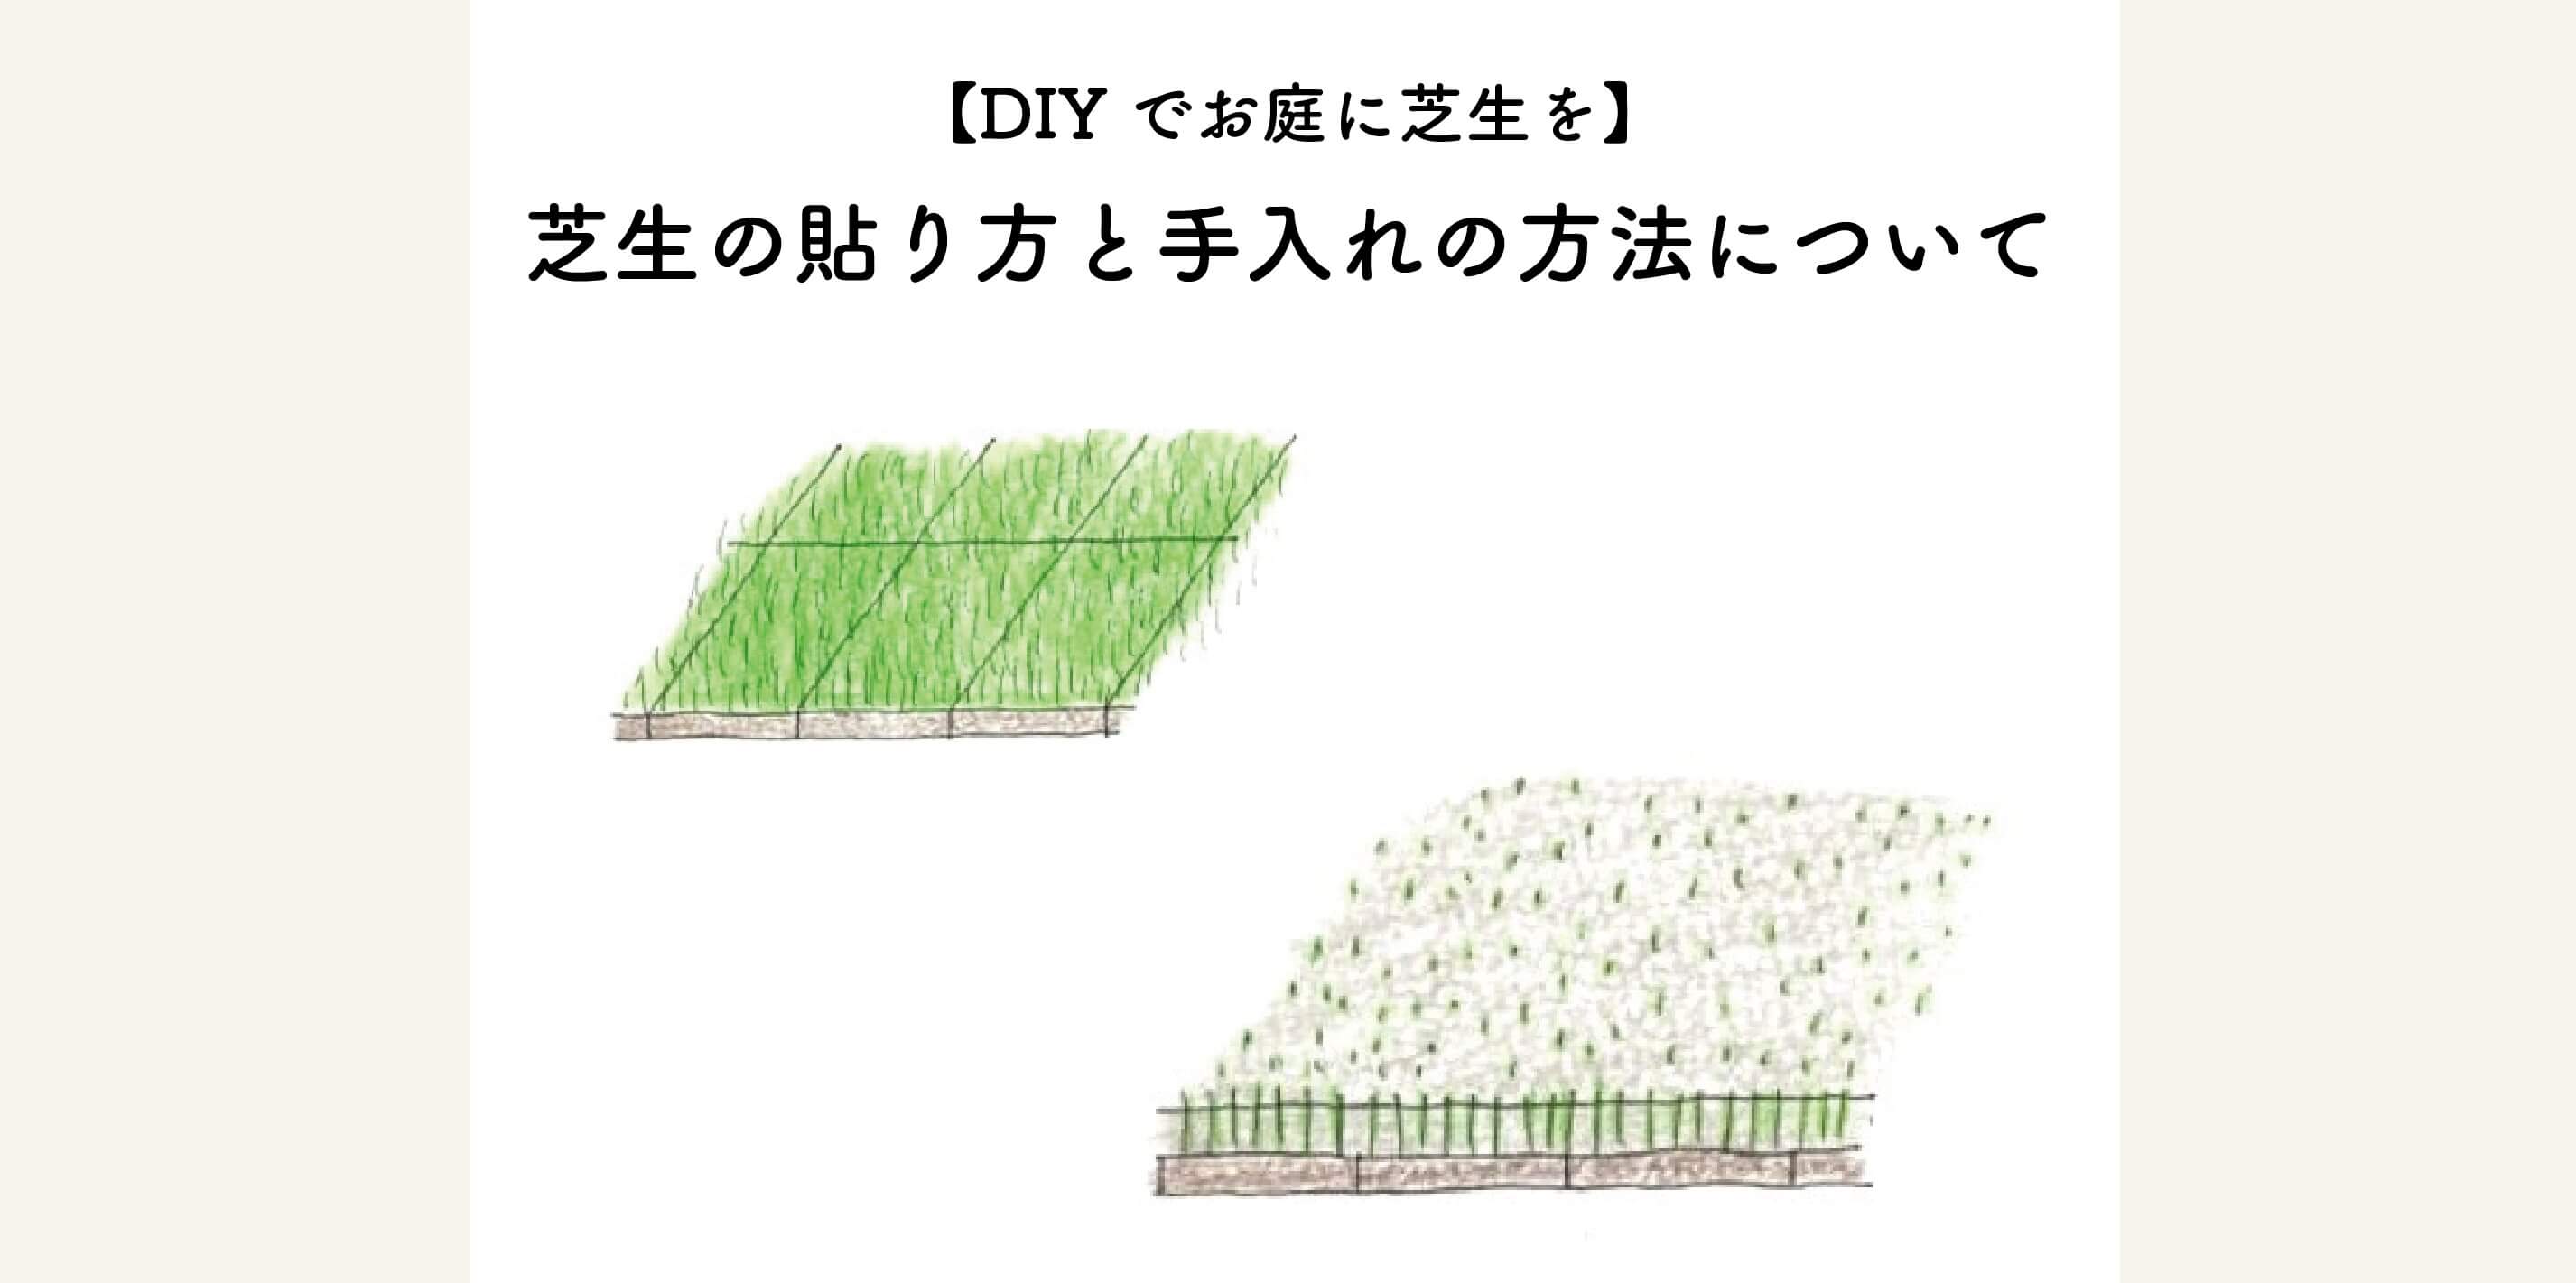 Diyでお庭に芝生を 芝生の張り方と手入れの方法について 切るを楽しむ アルスコーポレーション株式会社